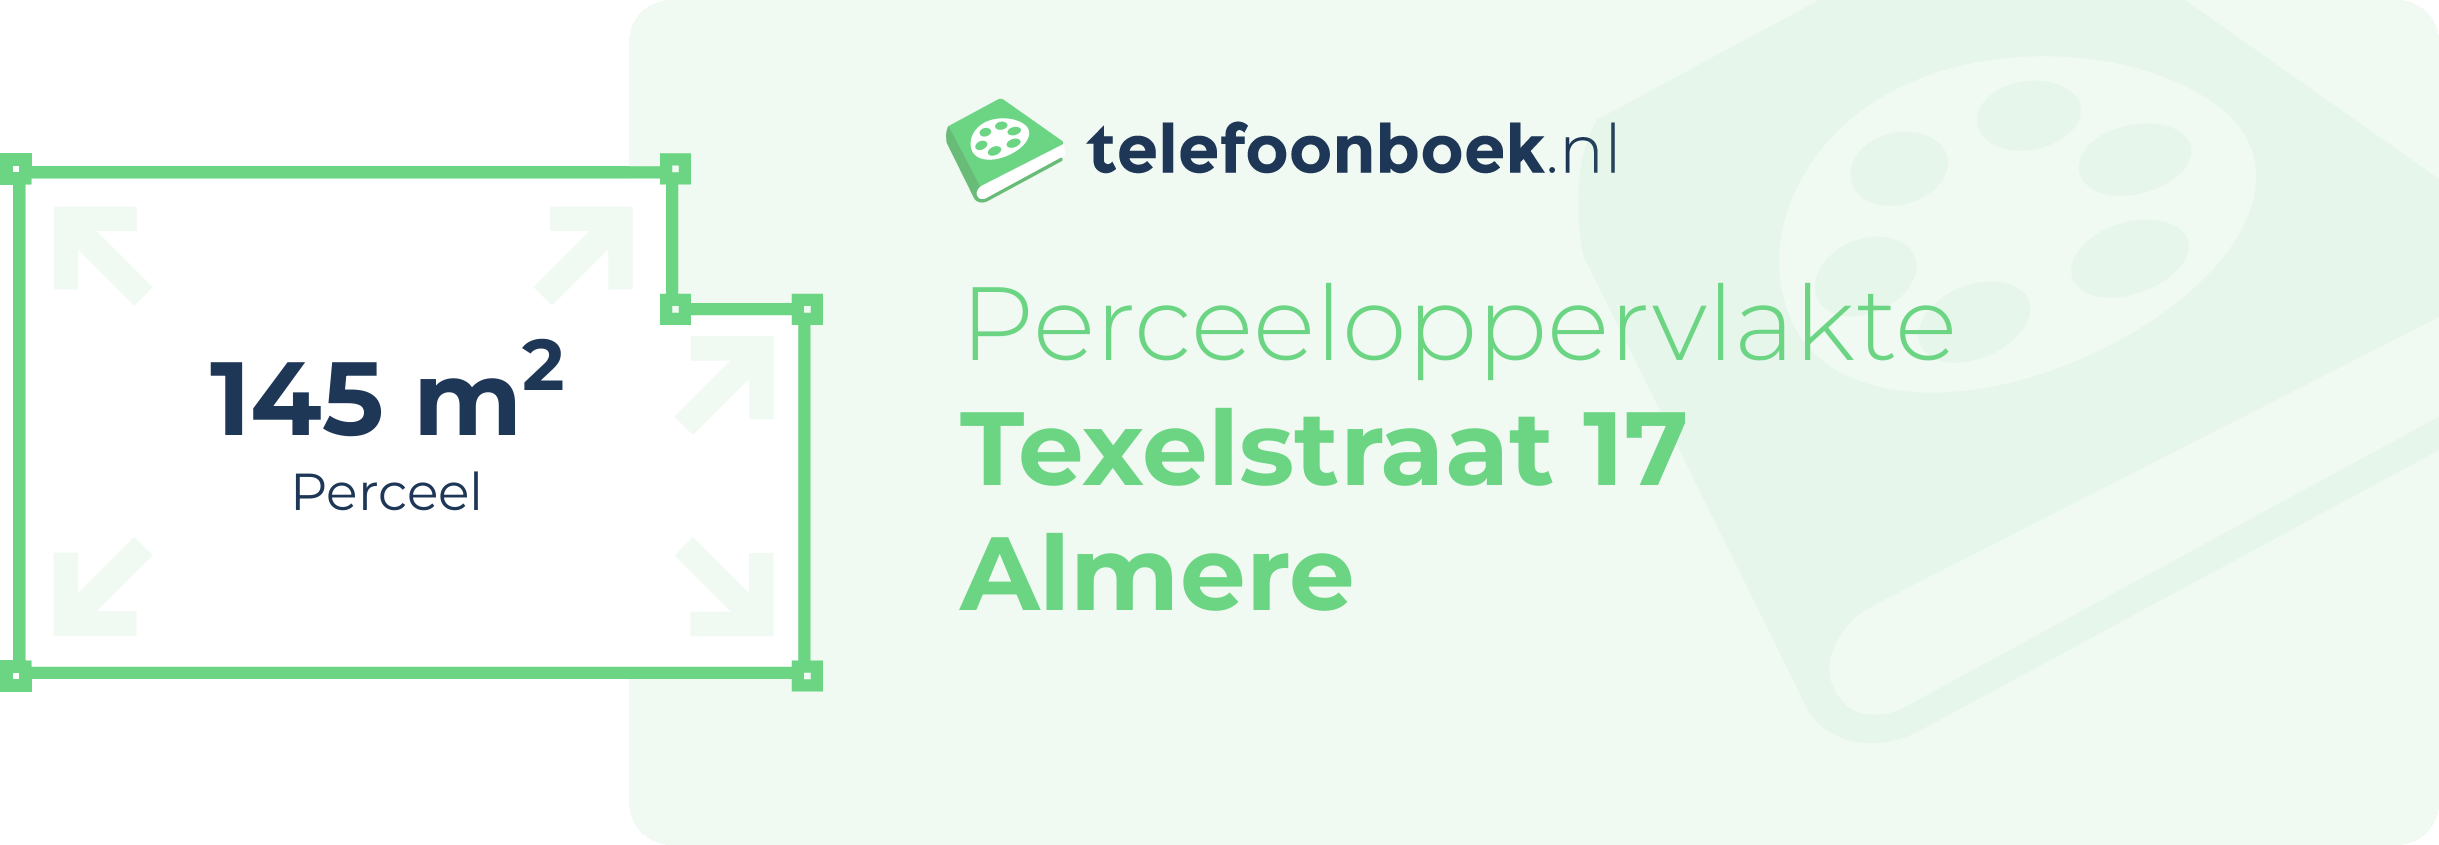 Perceeloppervlakte Texelstraat 17 Almere